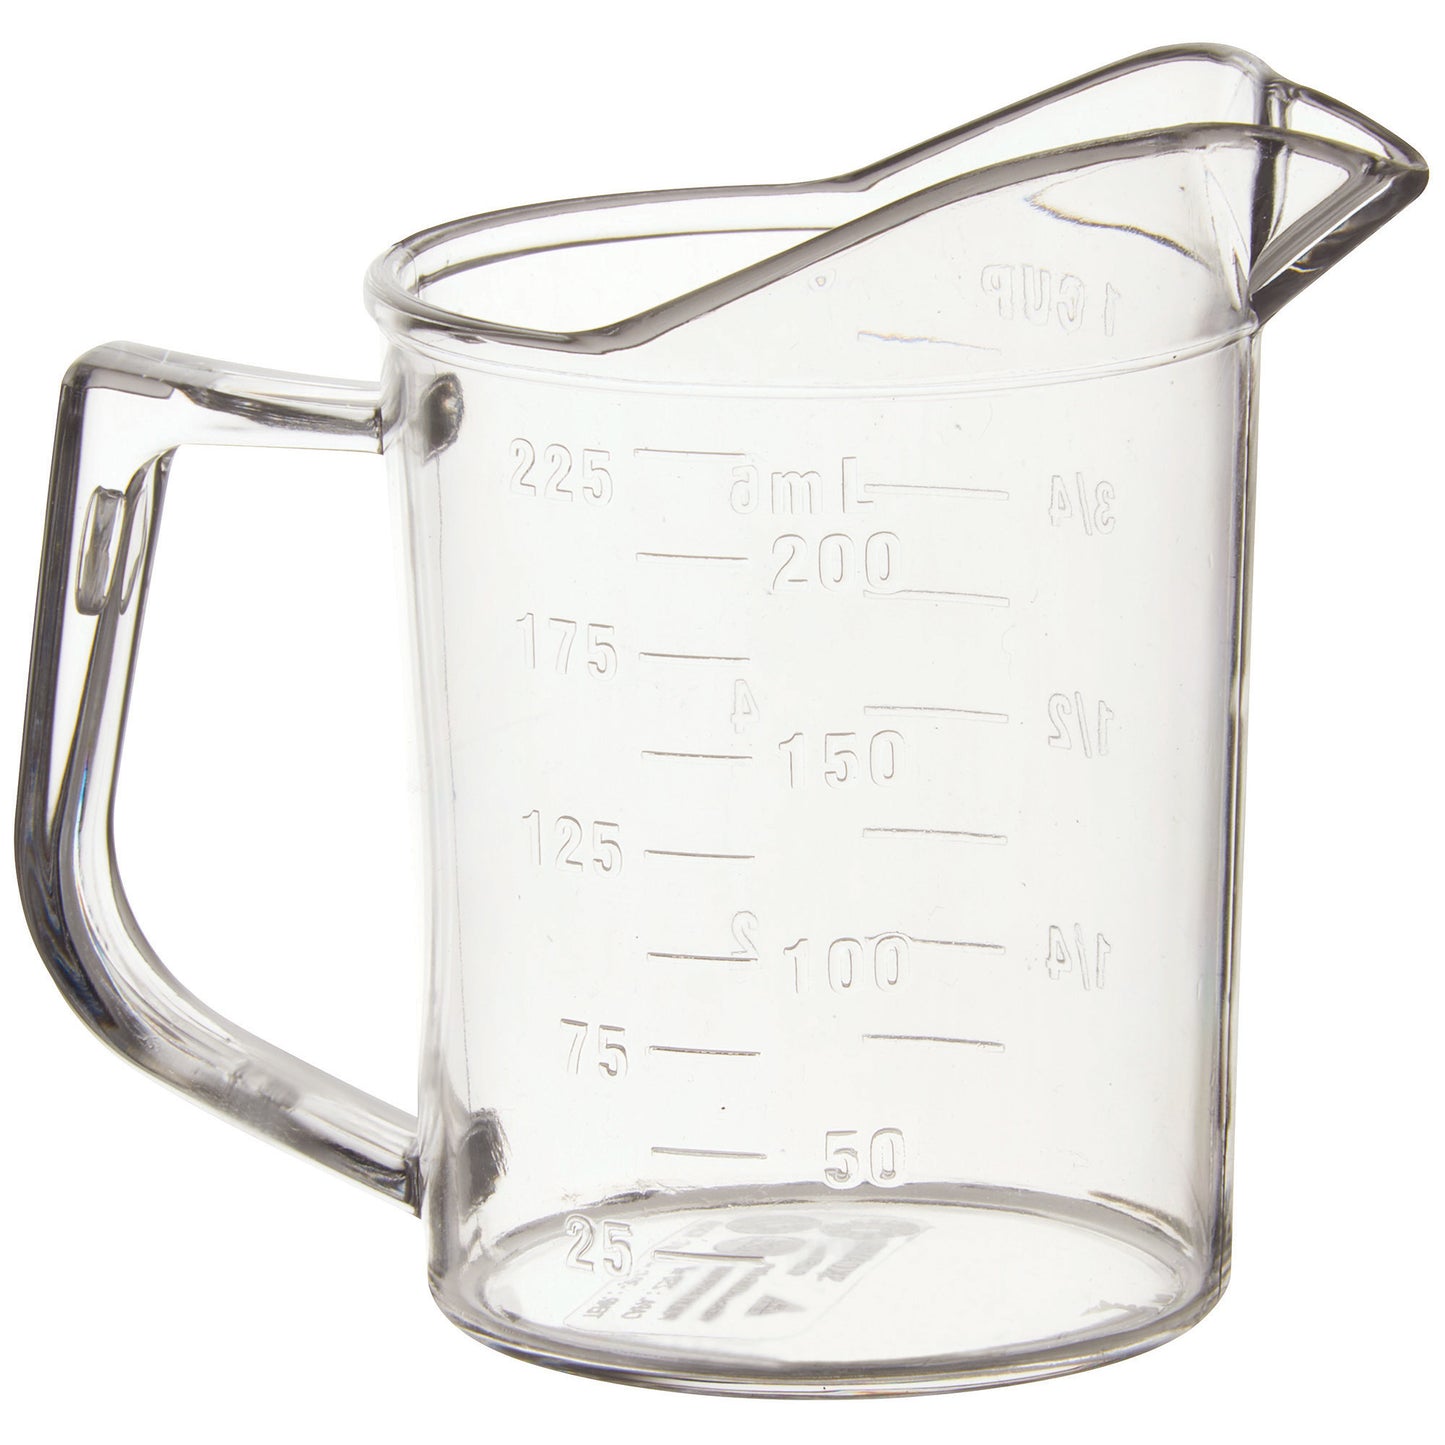 Polycarbonate Measuring Cup - 1 Cup